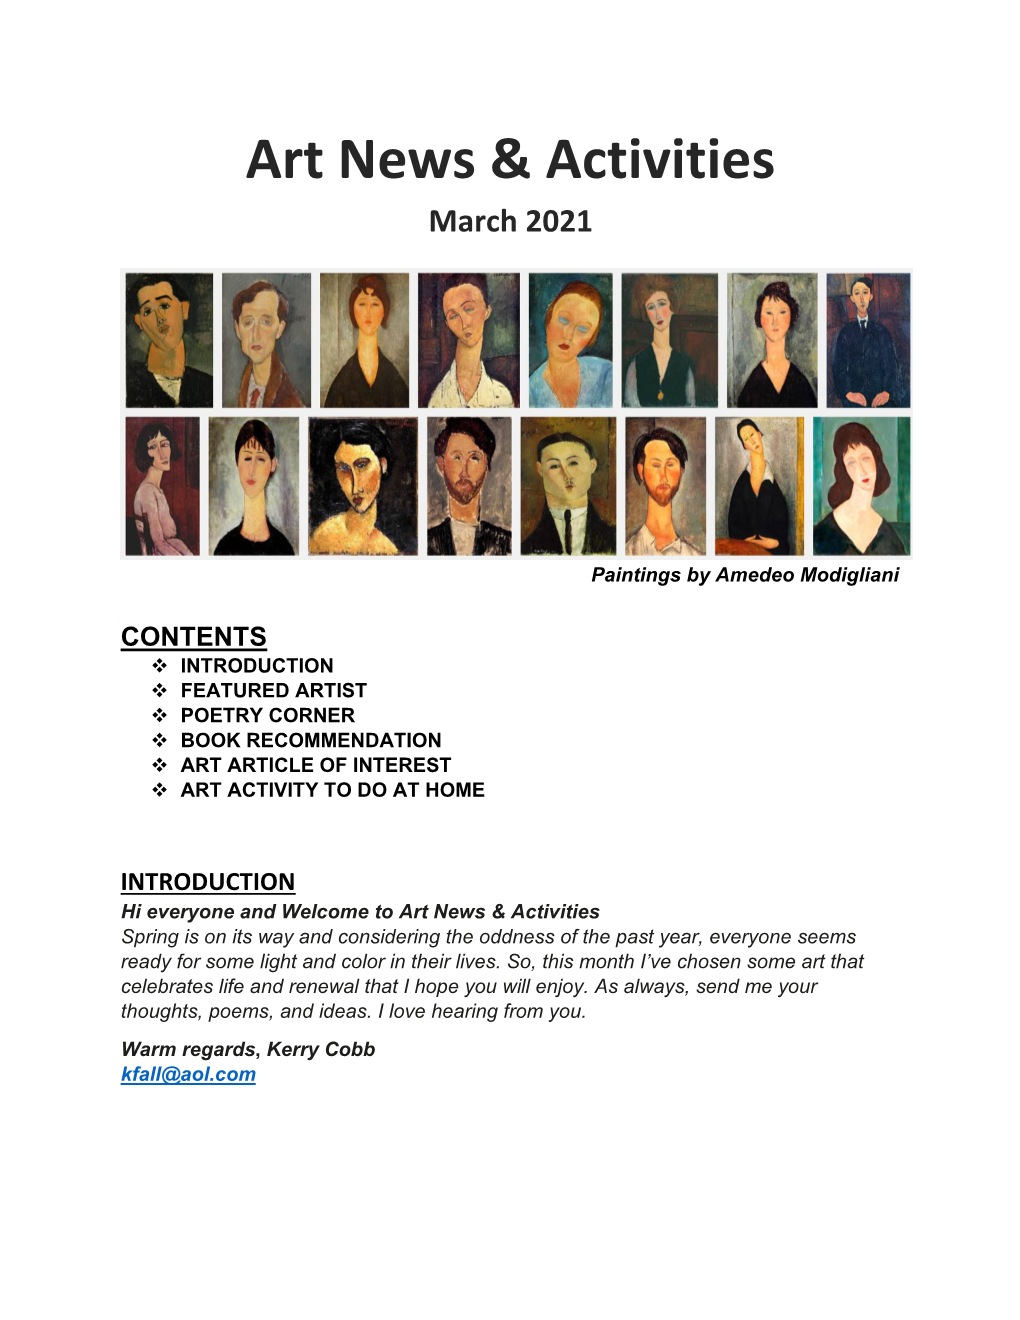 Art News & Activities March 2021